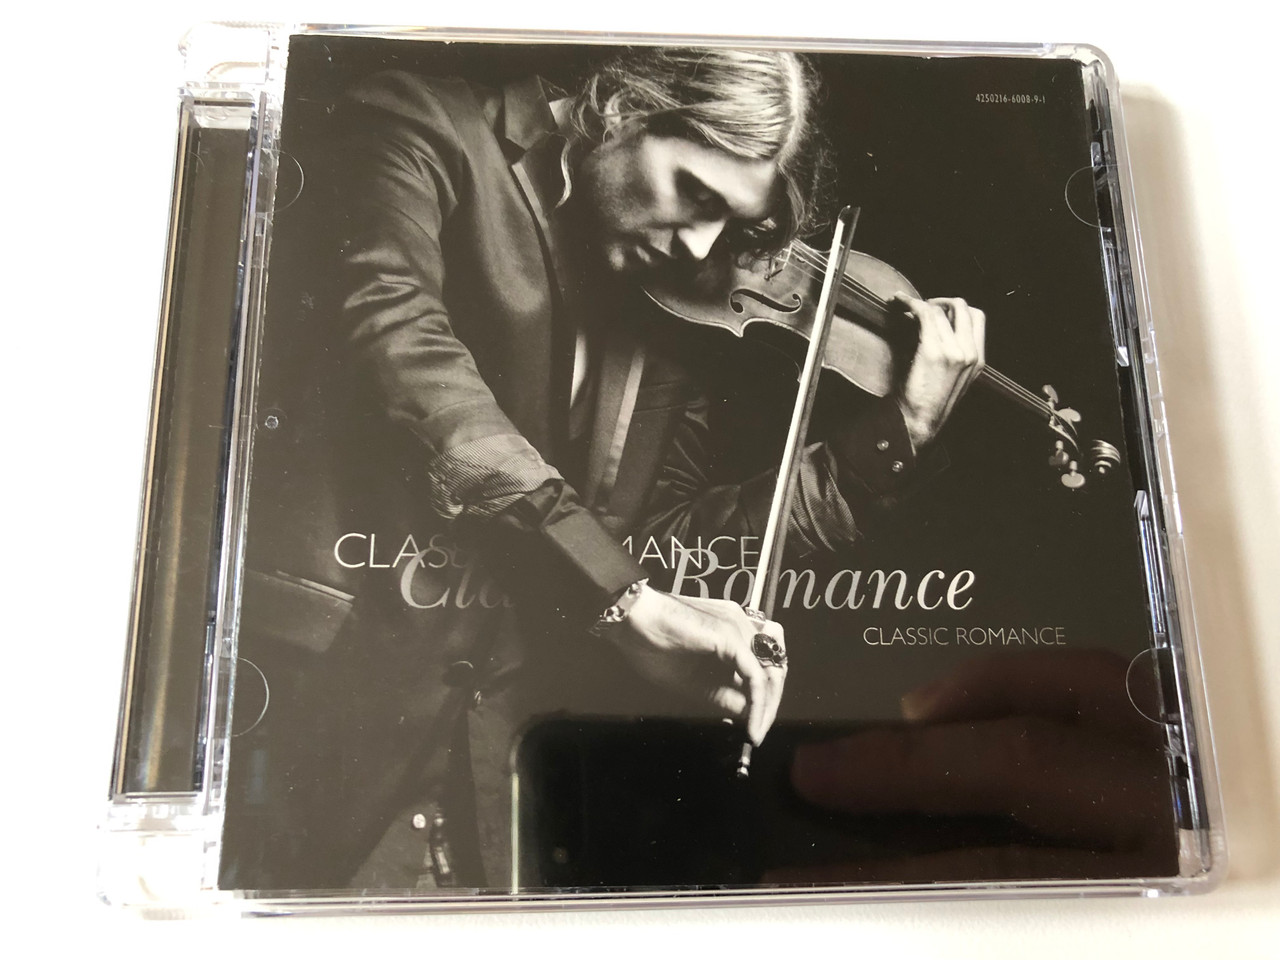 Classic Romance - David Garrett / Decca Audio CD 2009 / 4250216-6008-9-1